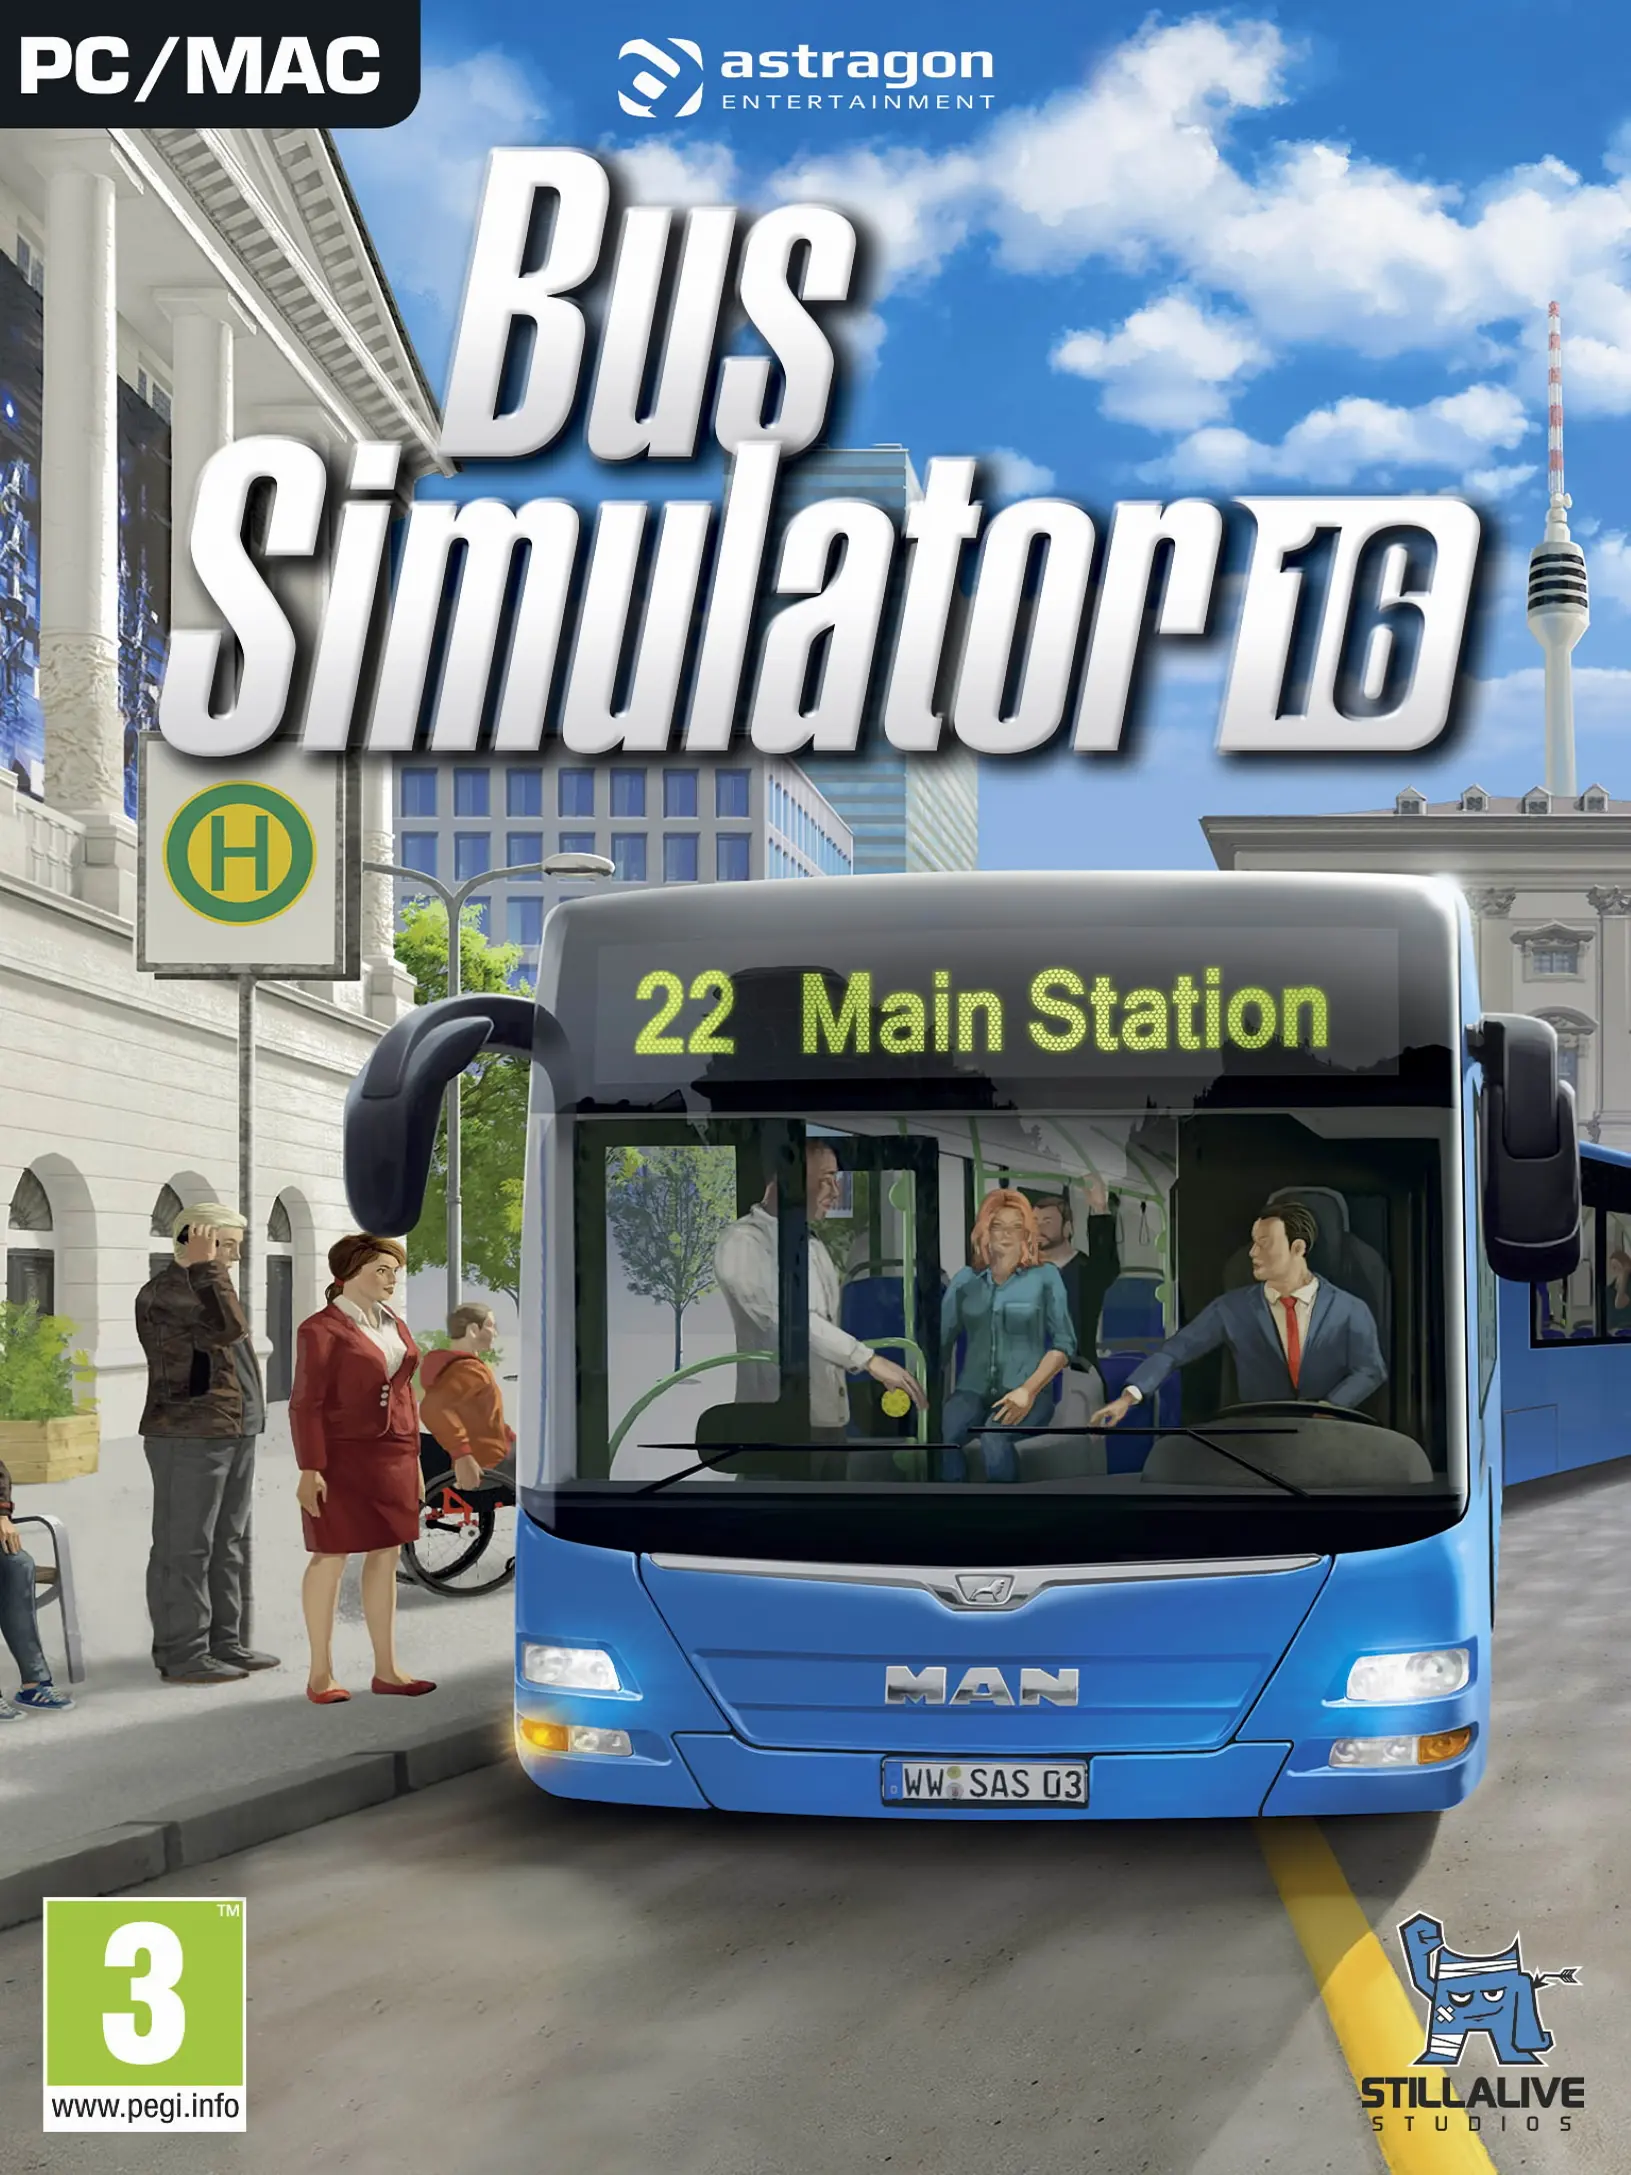 Bus Simulator 16 - Mercedes-Benz Citaro Pack DLC (PC / Mac) - Steam - Digital Code